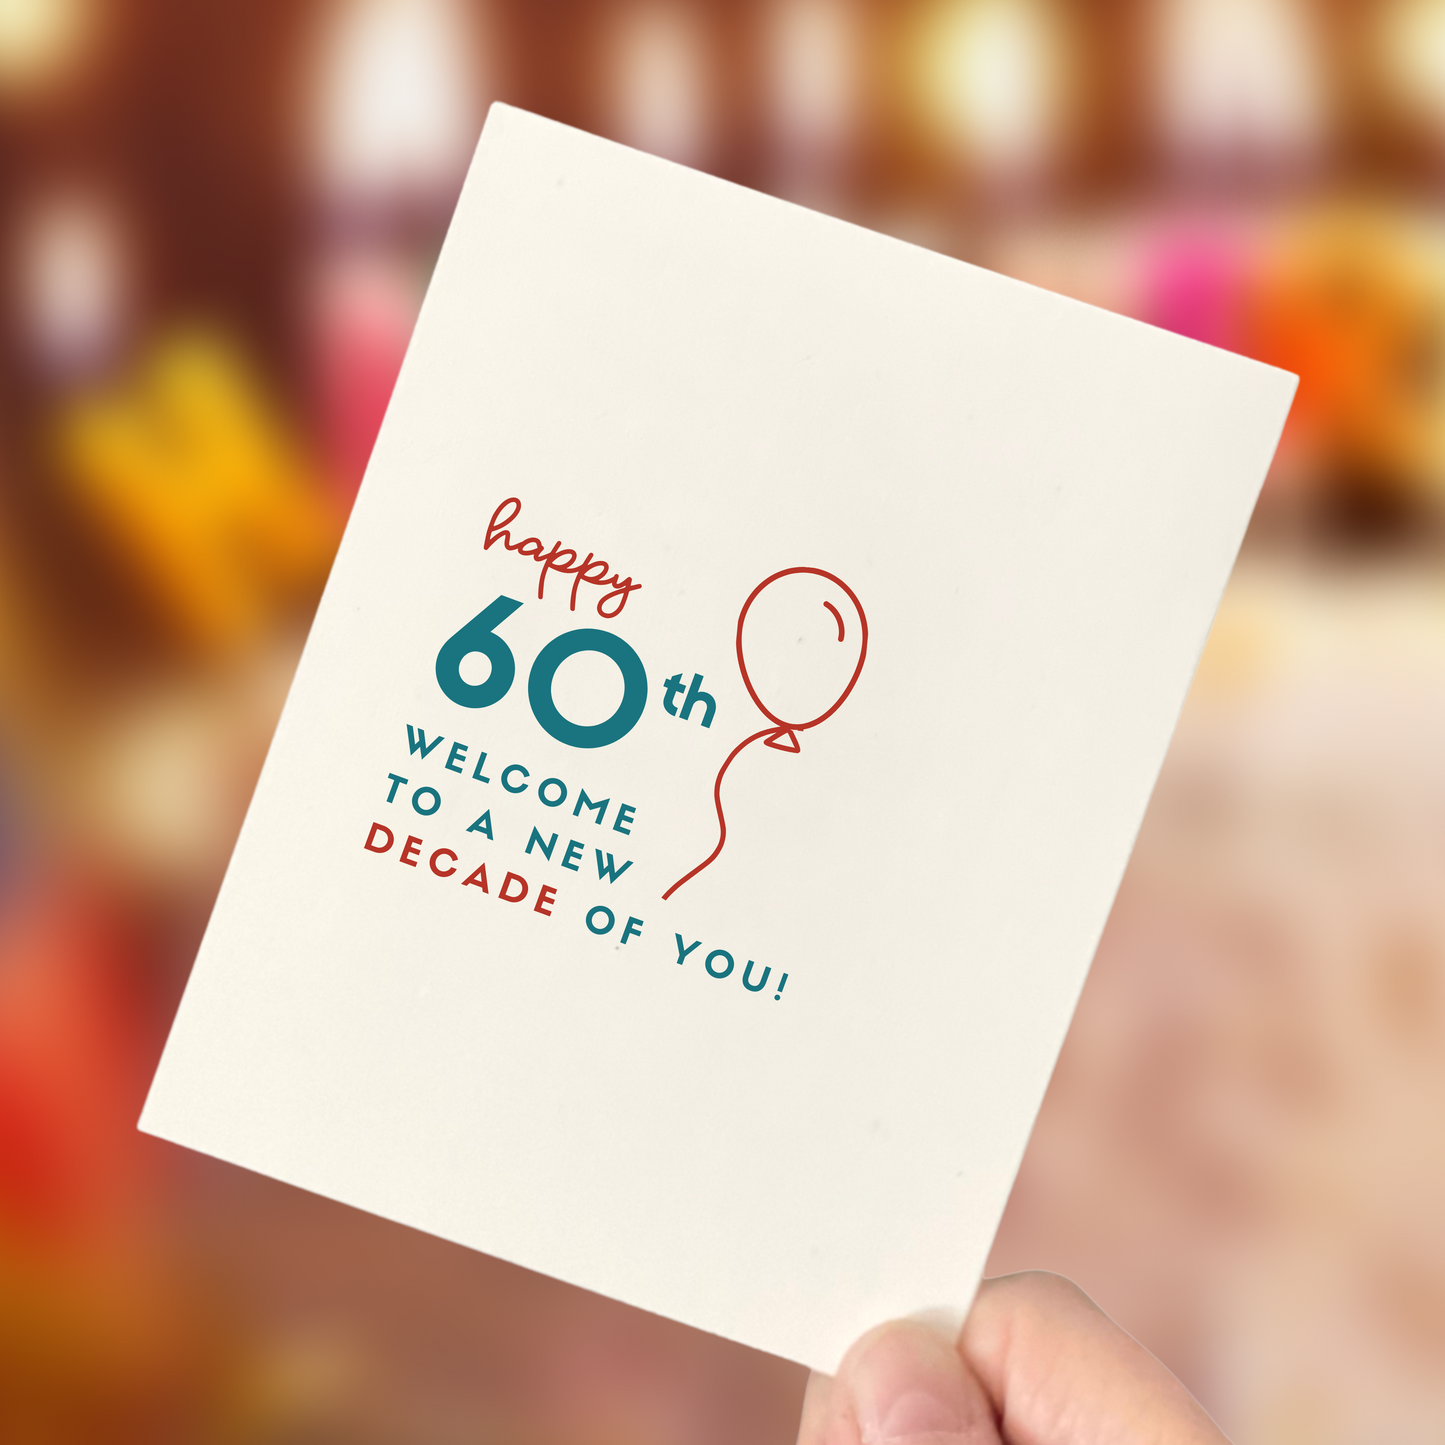 50th, 60th, or 70th milestone birthday card, New decade of you!